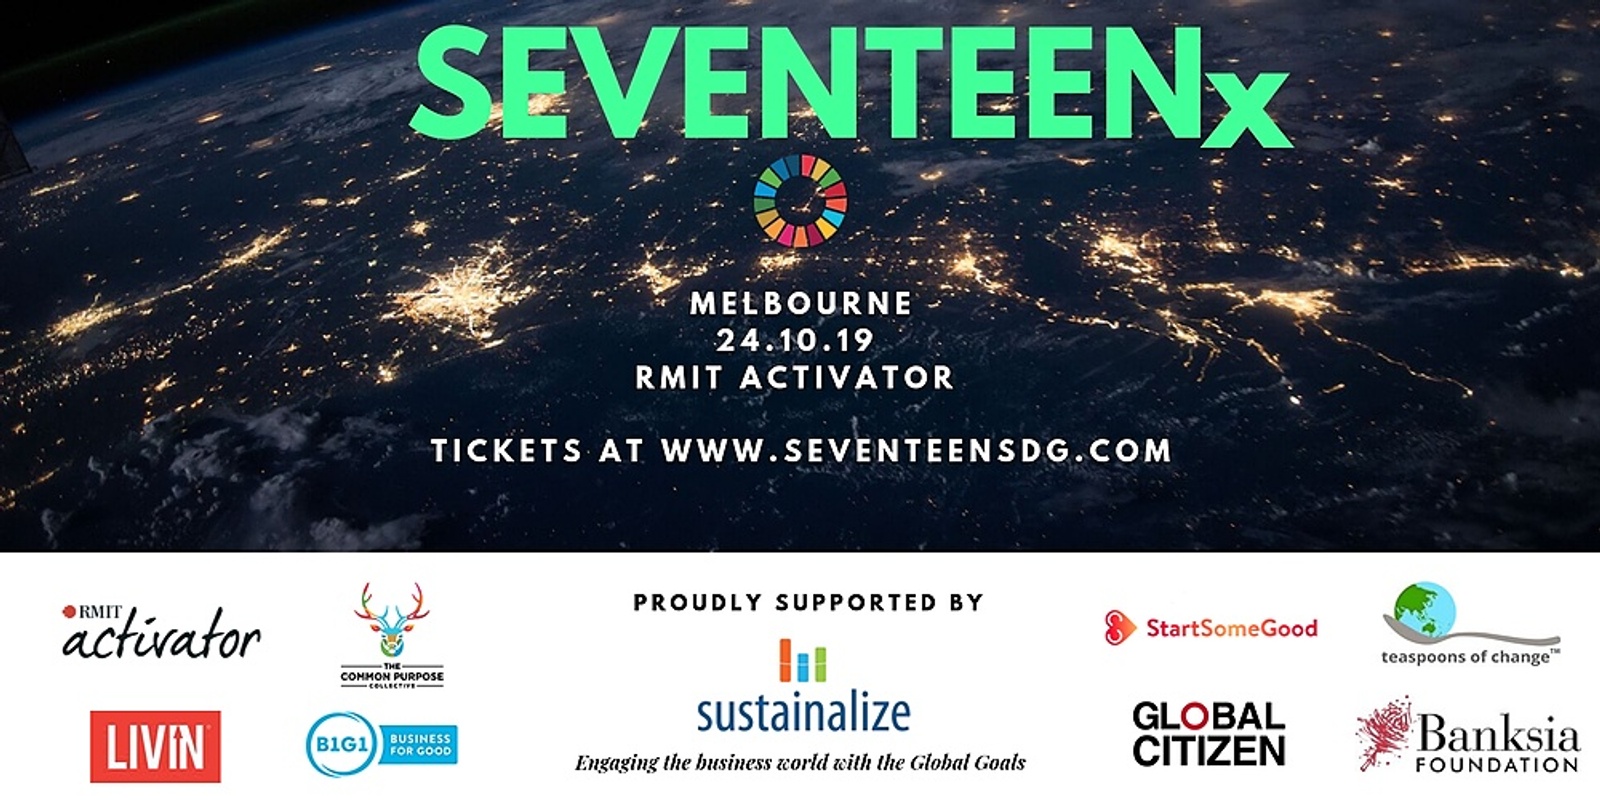 Banner image for SEVENTEENx Melbourne